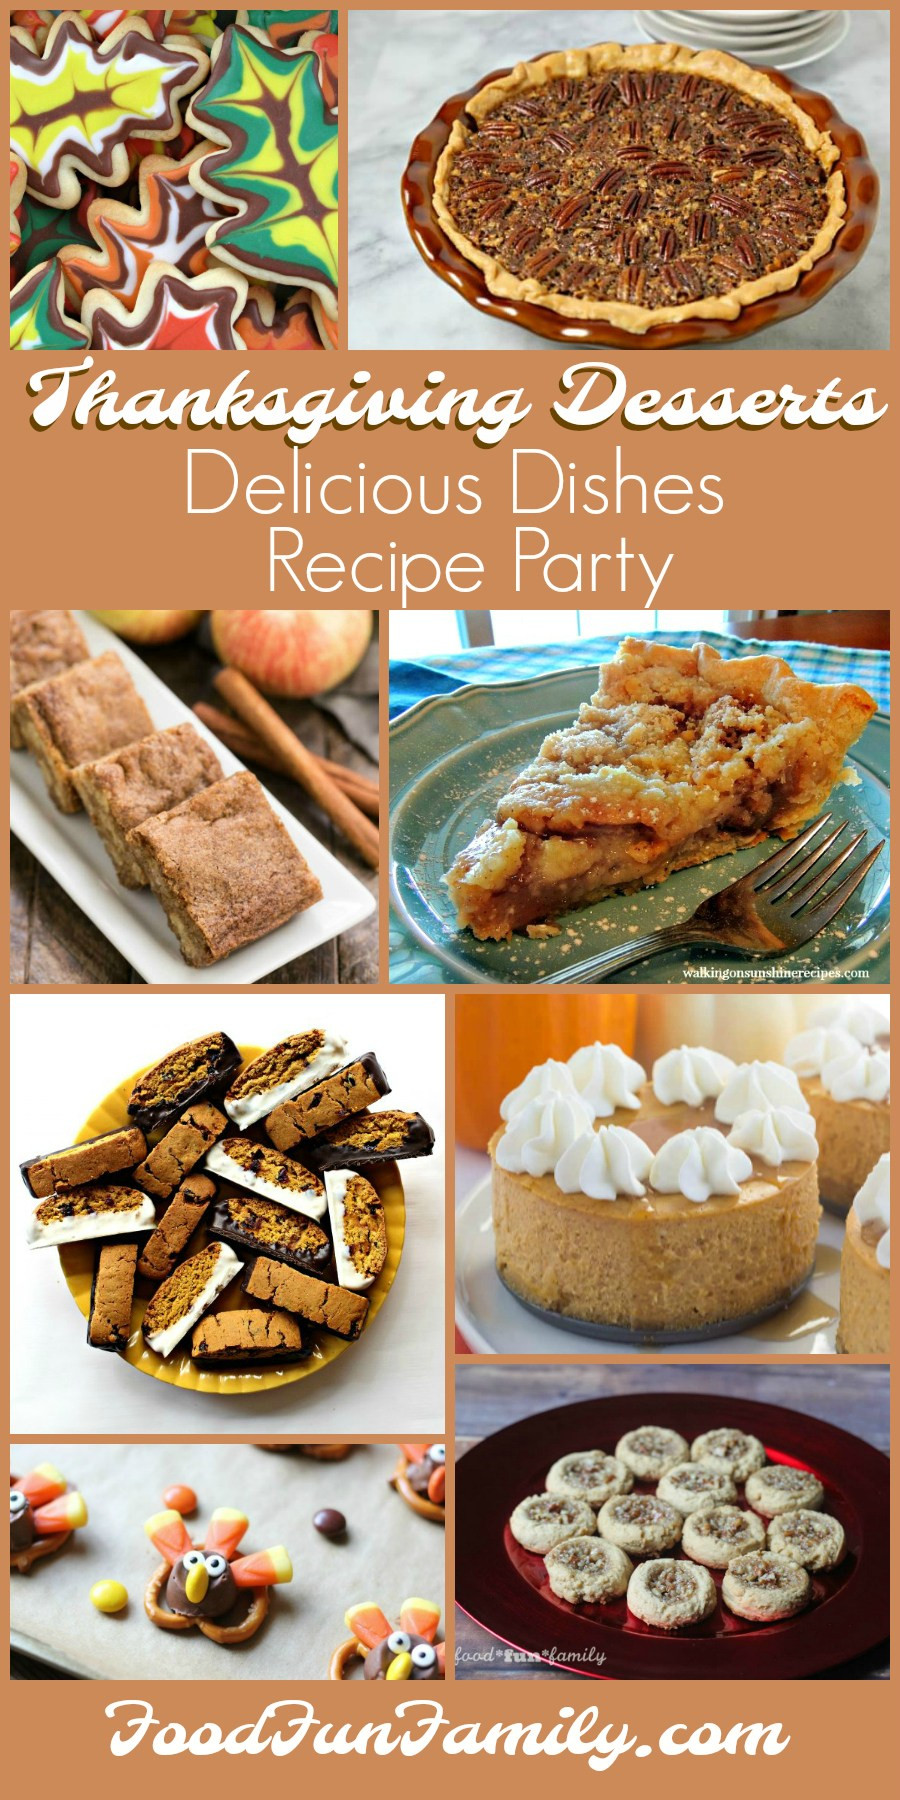 Pinterest Thanksgiving Desserts
 Thanksgiving Dessert Recipes – Delicious Dishes Recipe